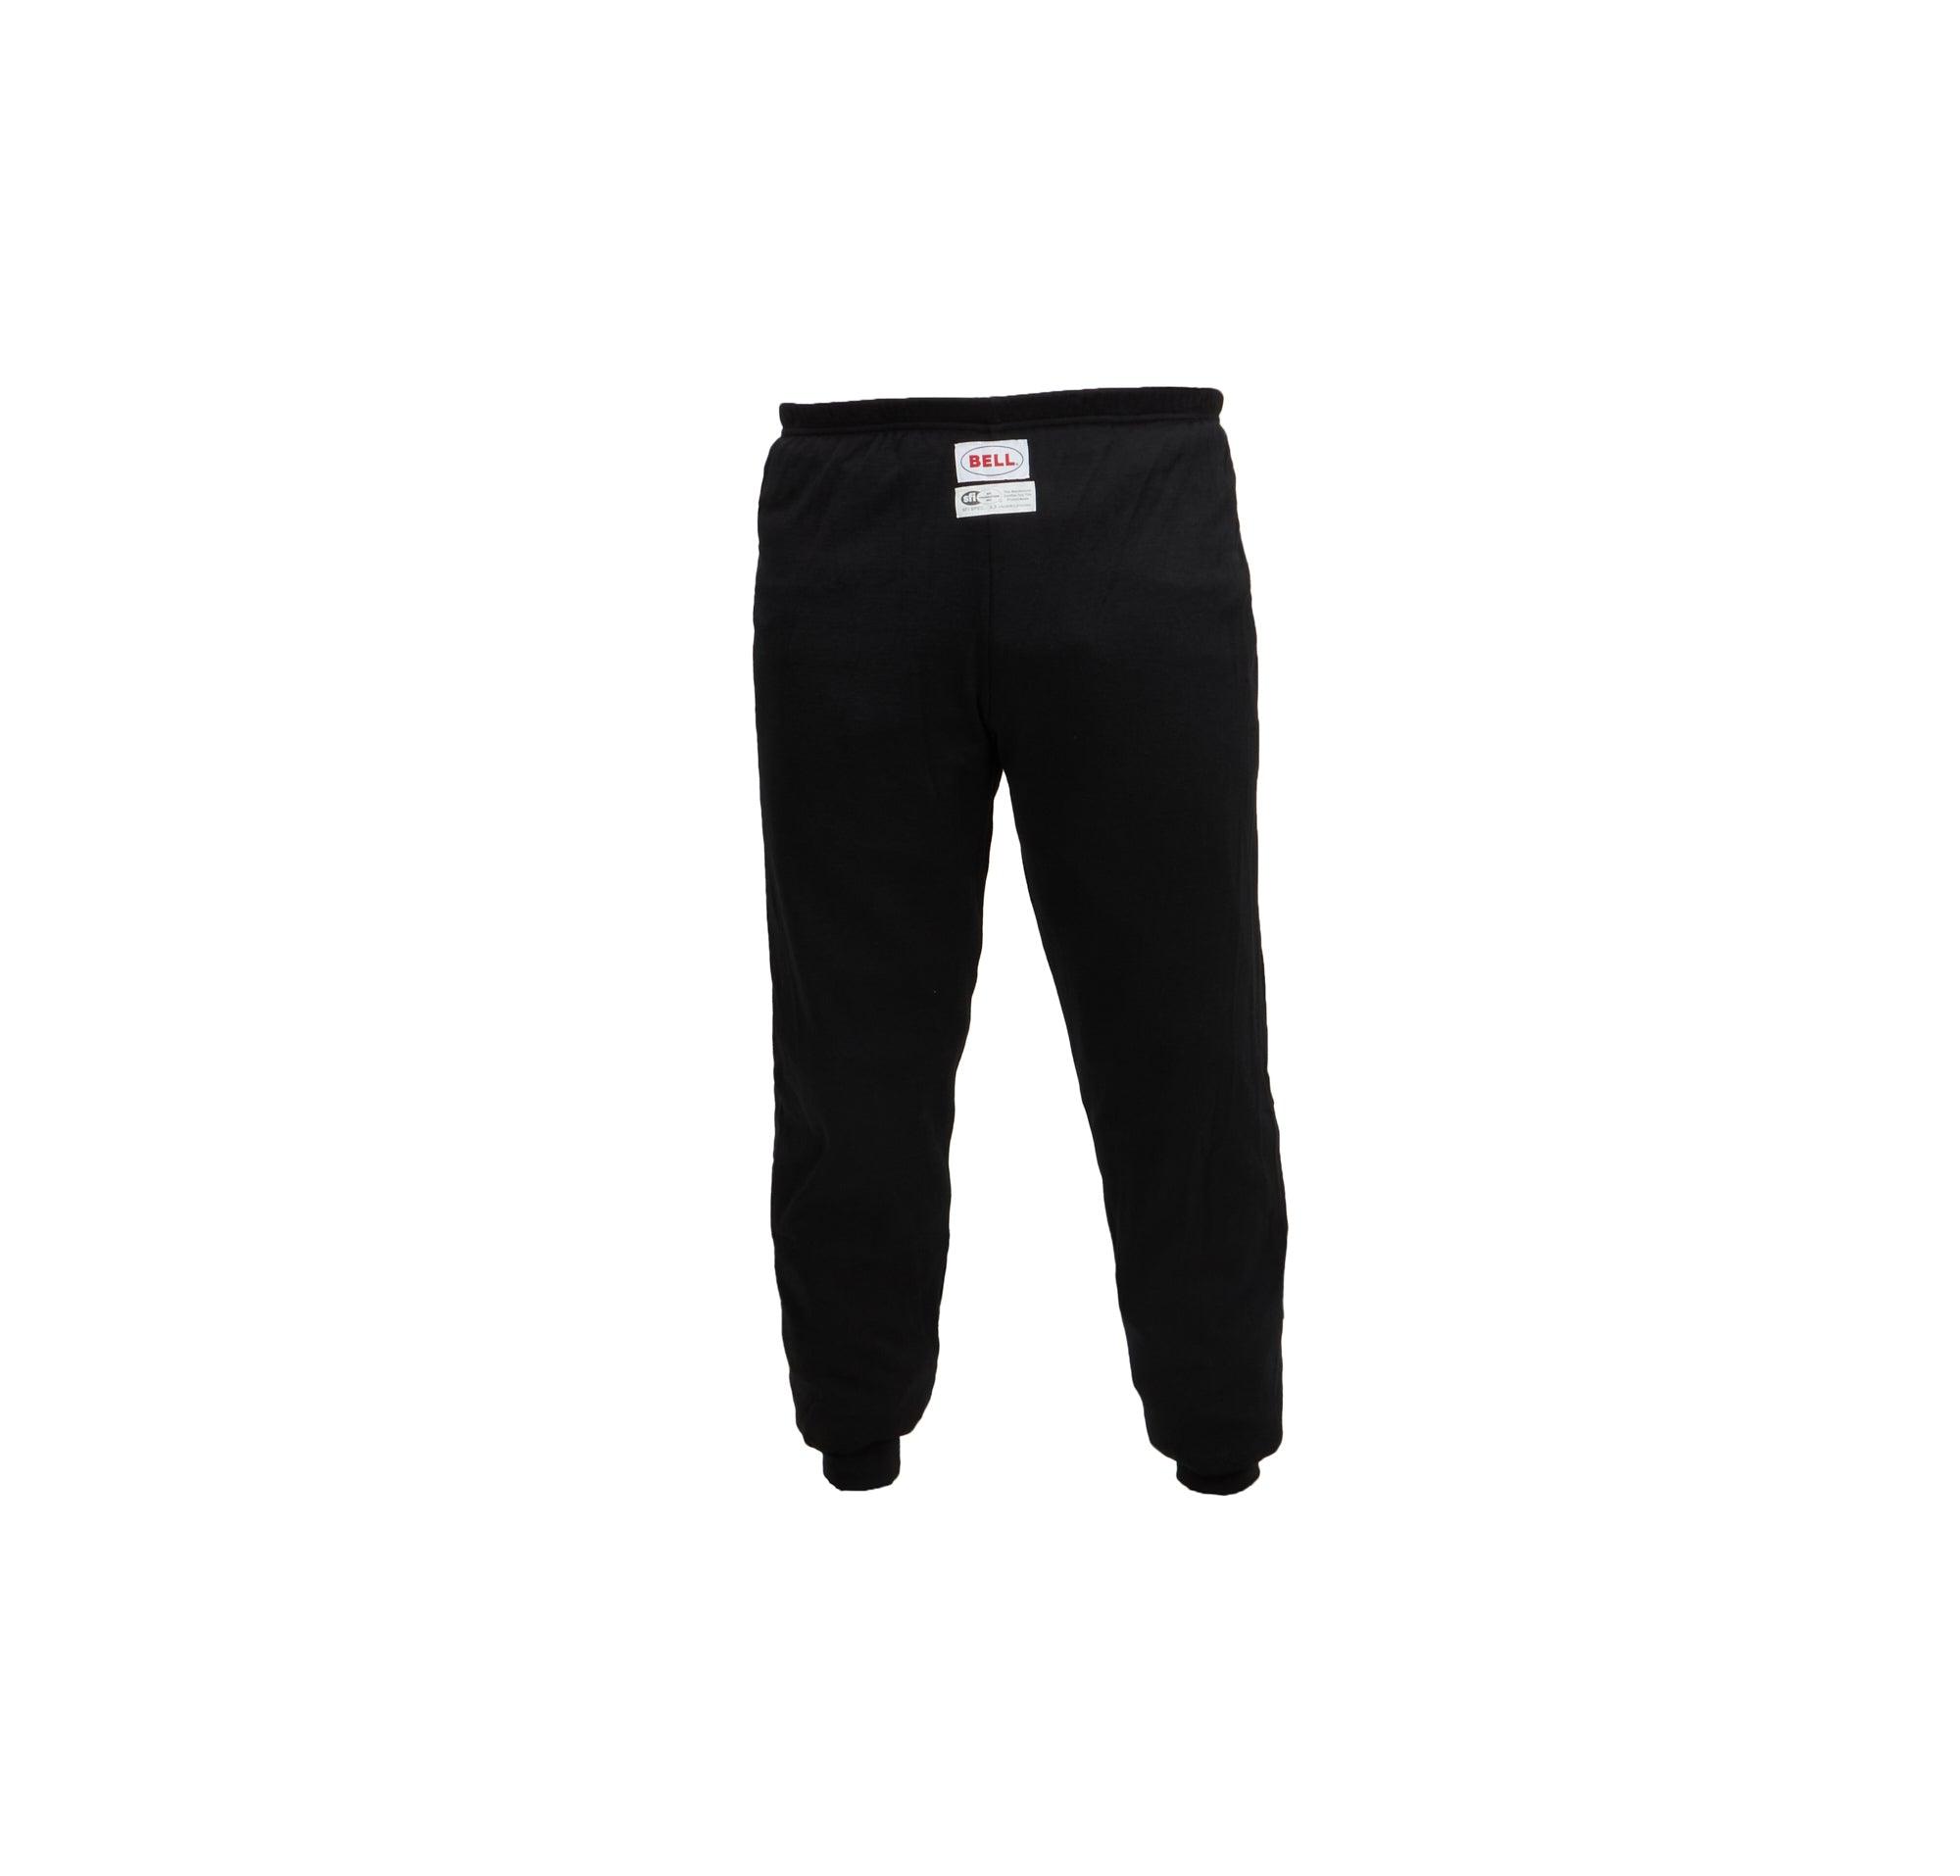 Underwear Bottom SPORT- TX Black 2X SFI 3.3/5 - Burlile Performance Products